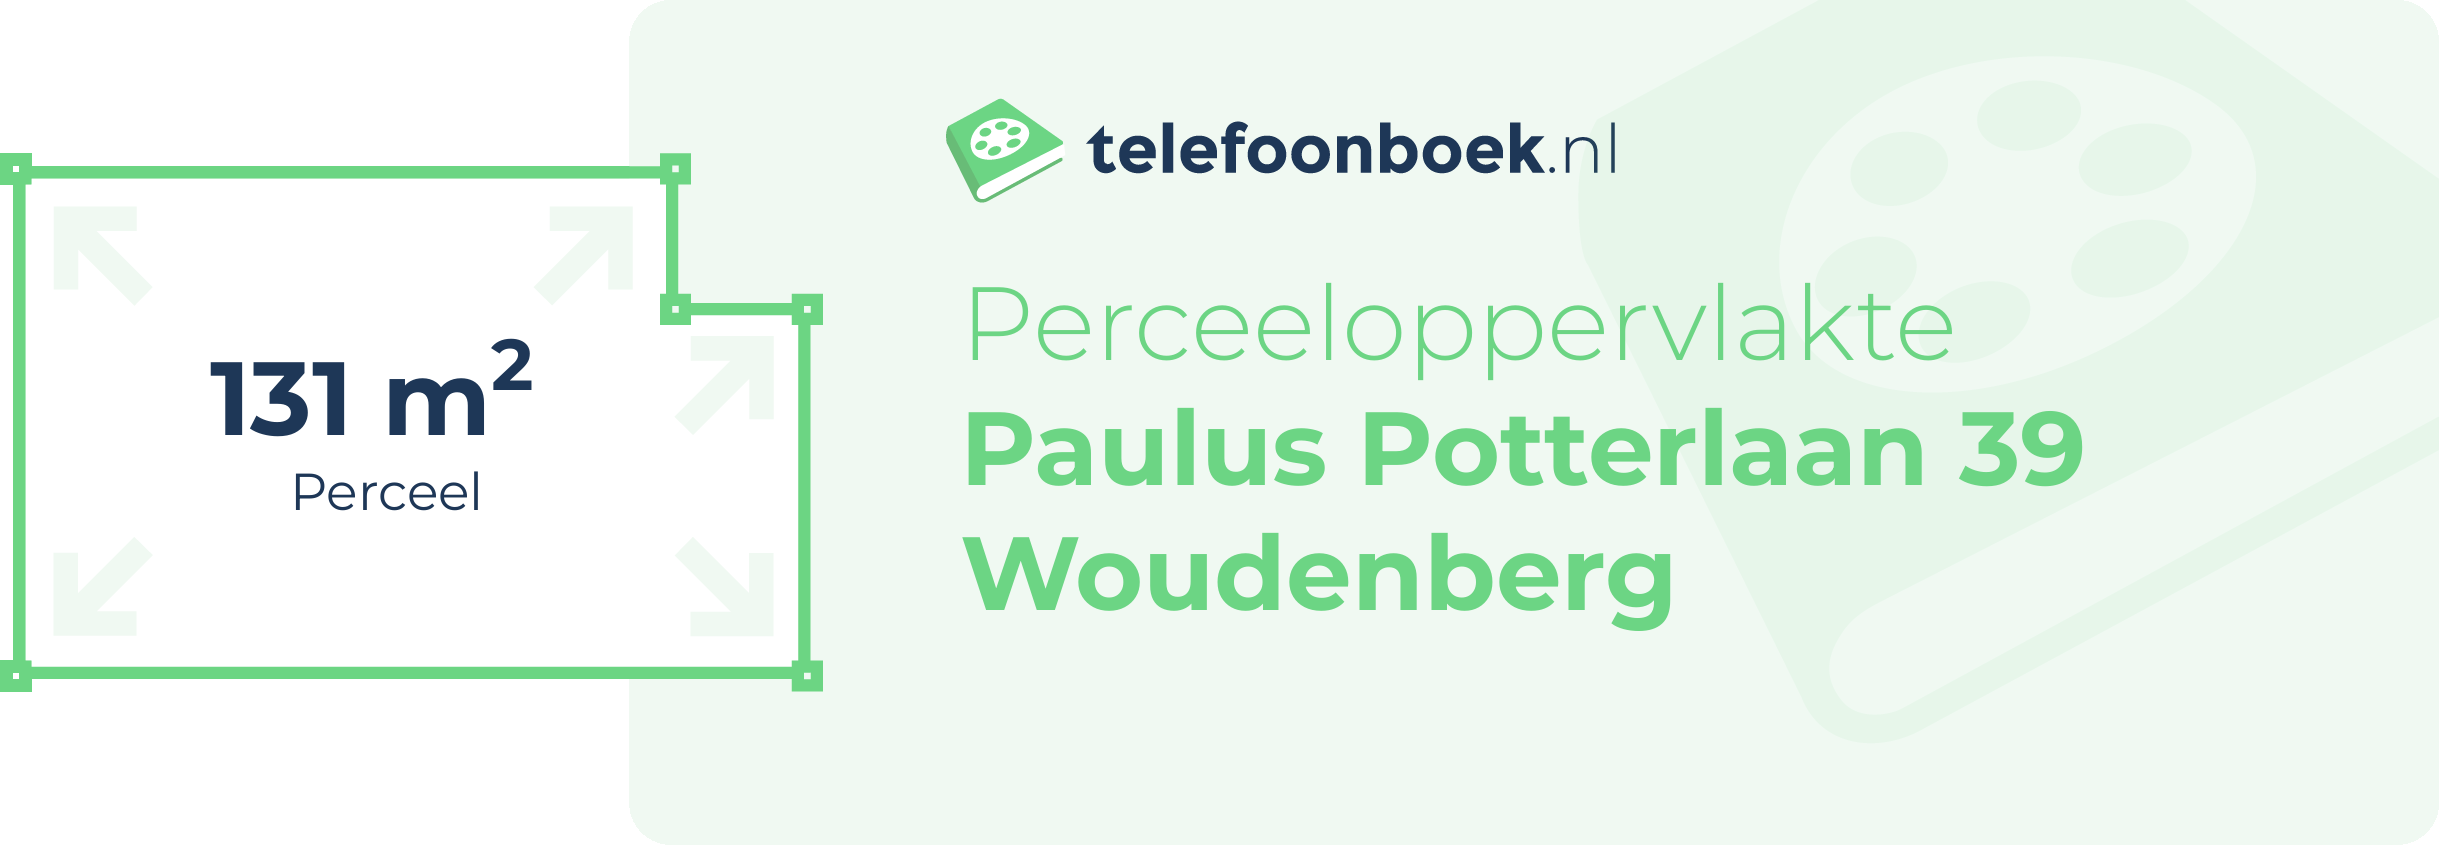 Perceeloppervlakte Paulus Potterlaan 39 Woudenberg